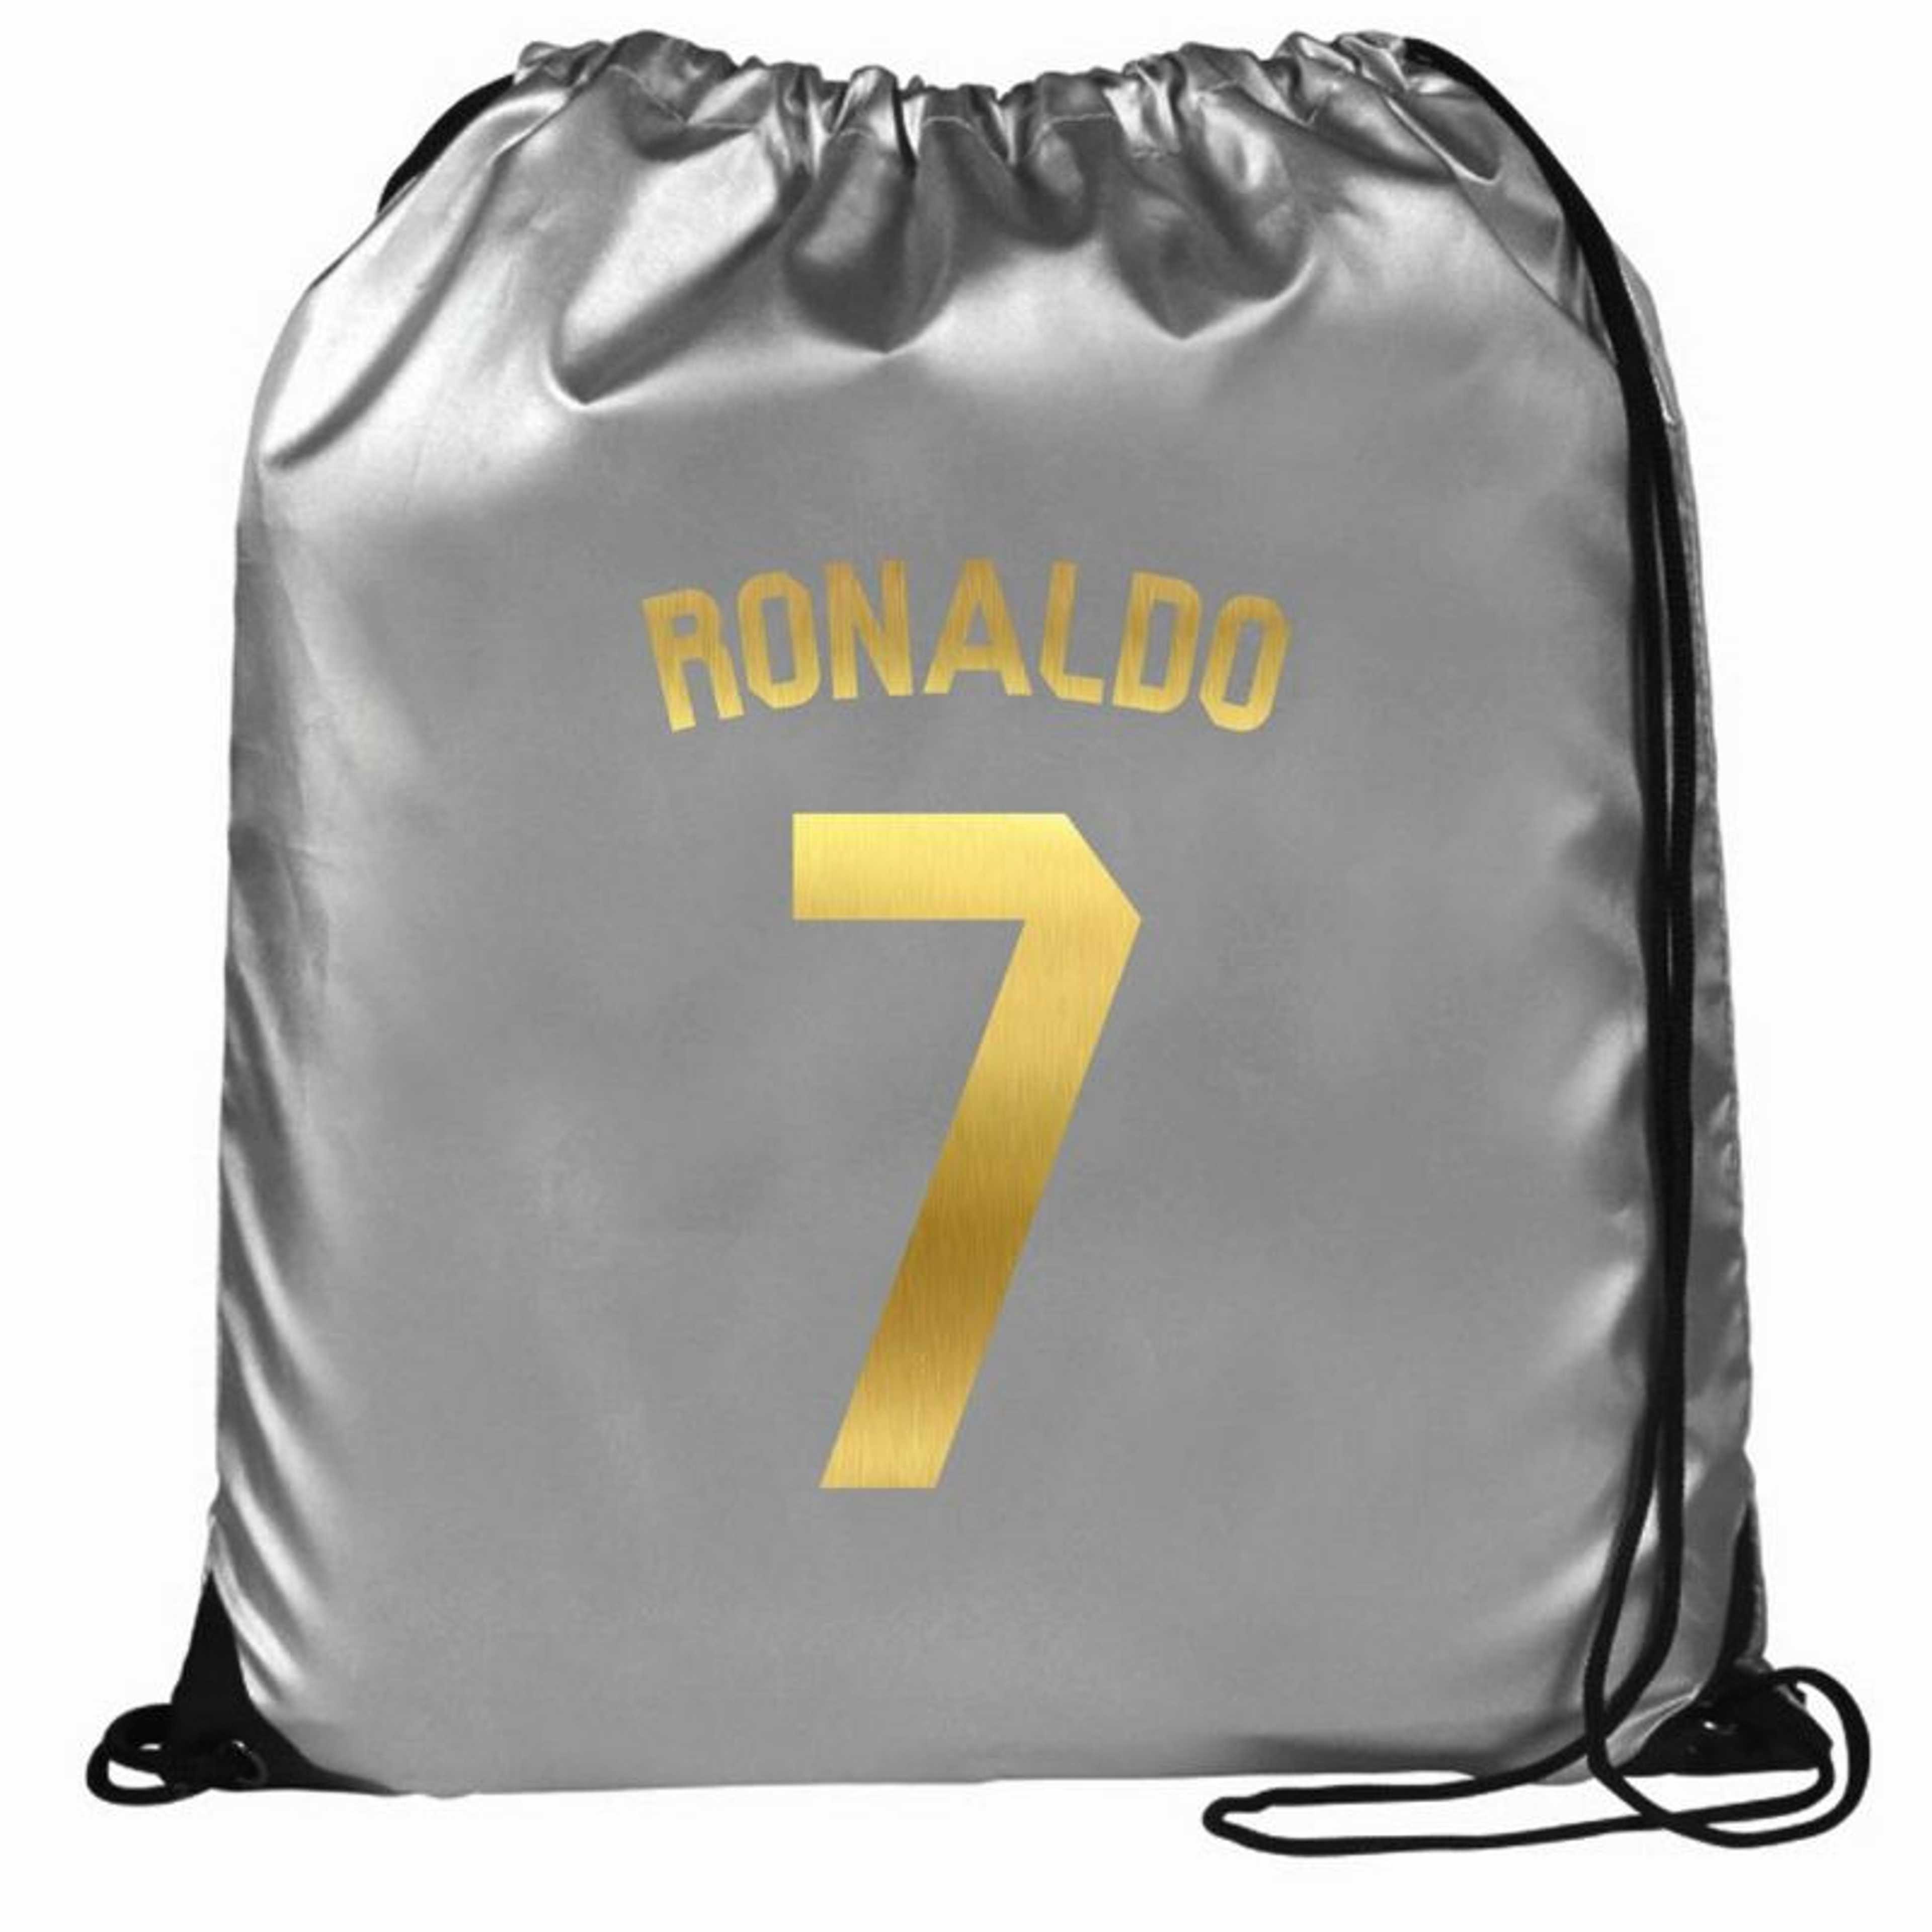 Ronaldo Drawstring Bag